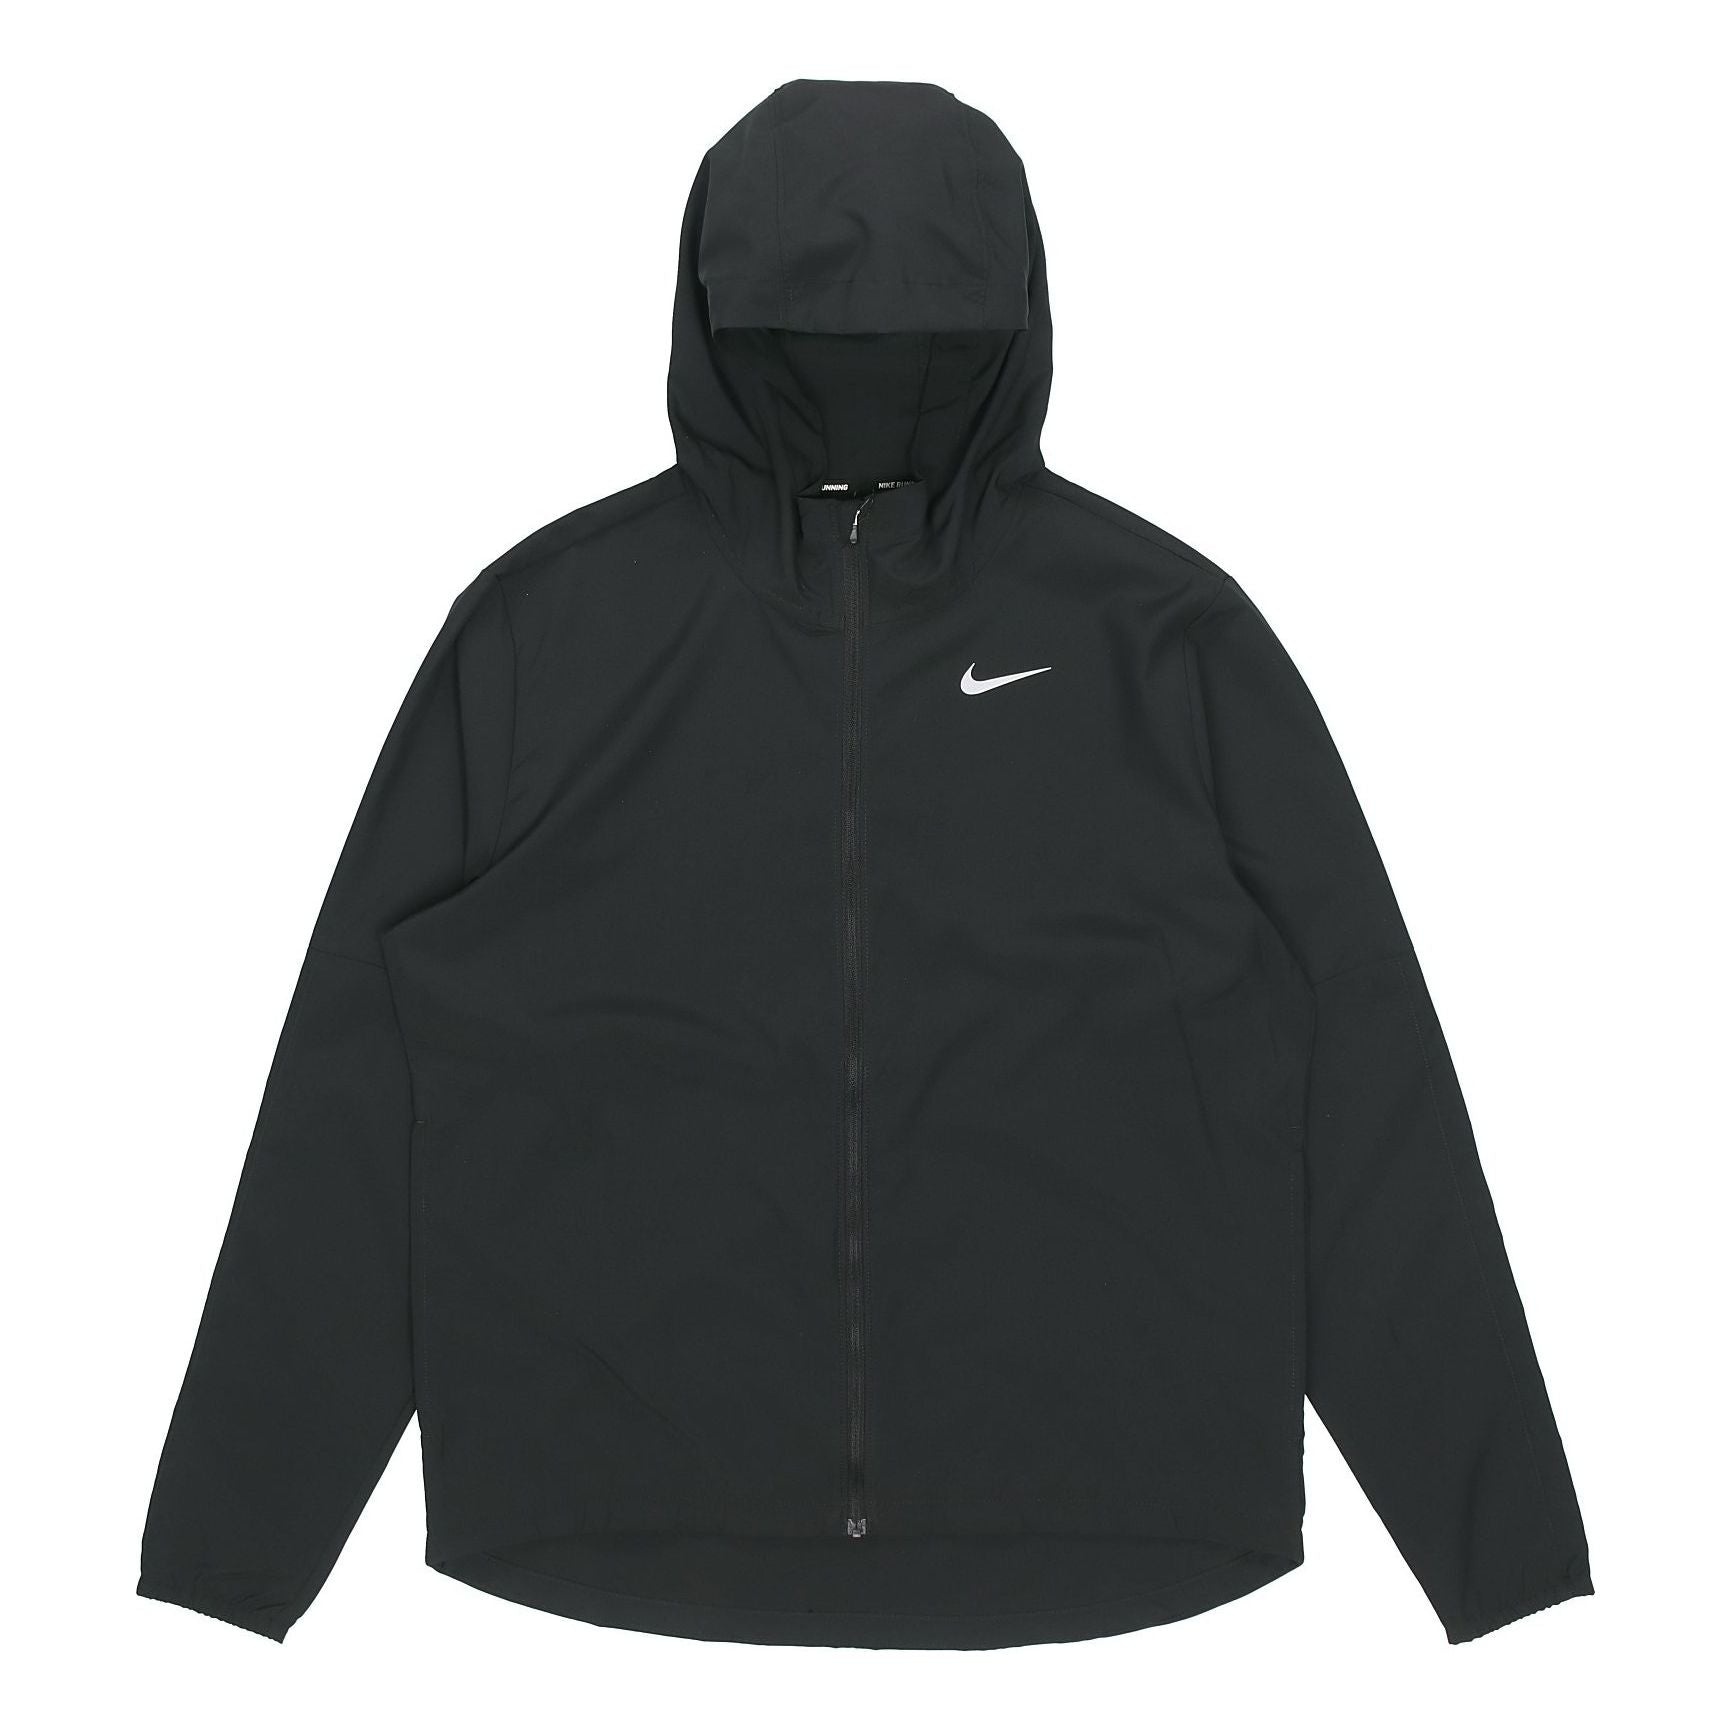 Nike Windrunner Running Jacket 'Black' CU5354-010 - 1